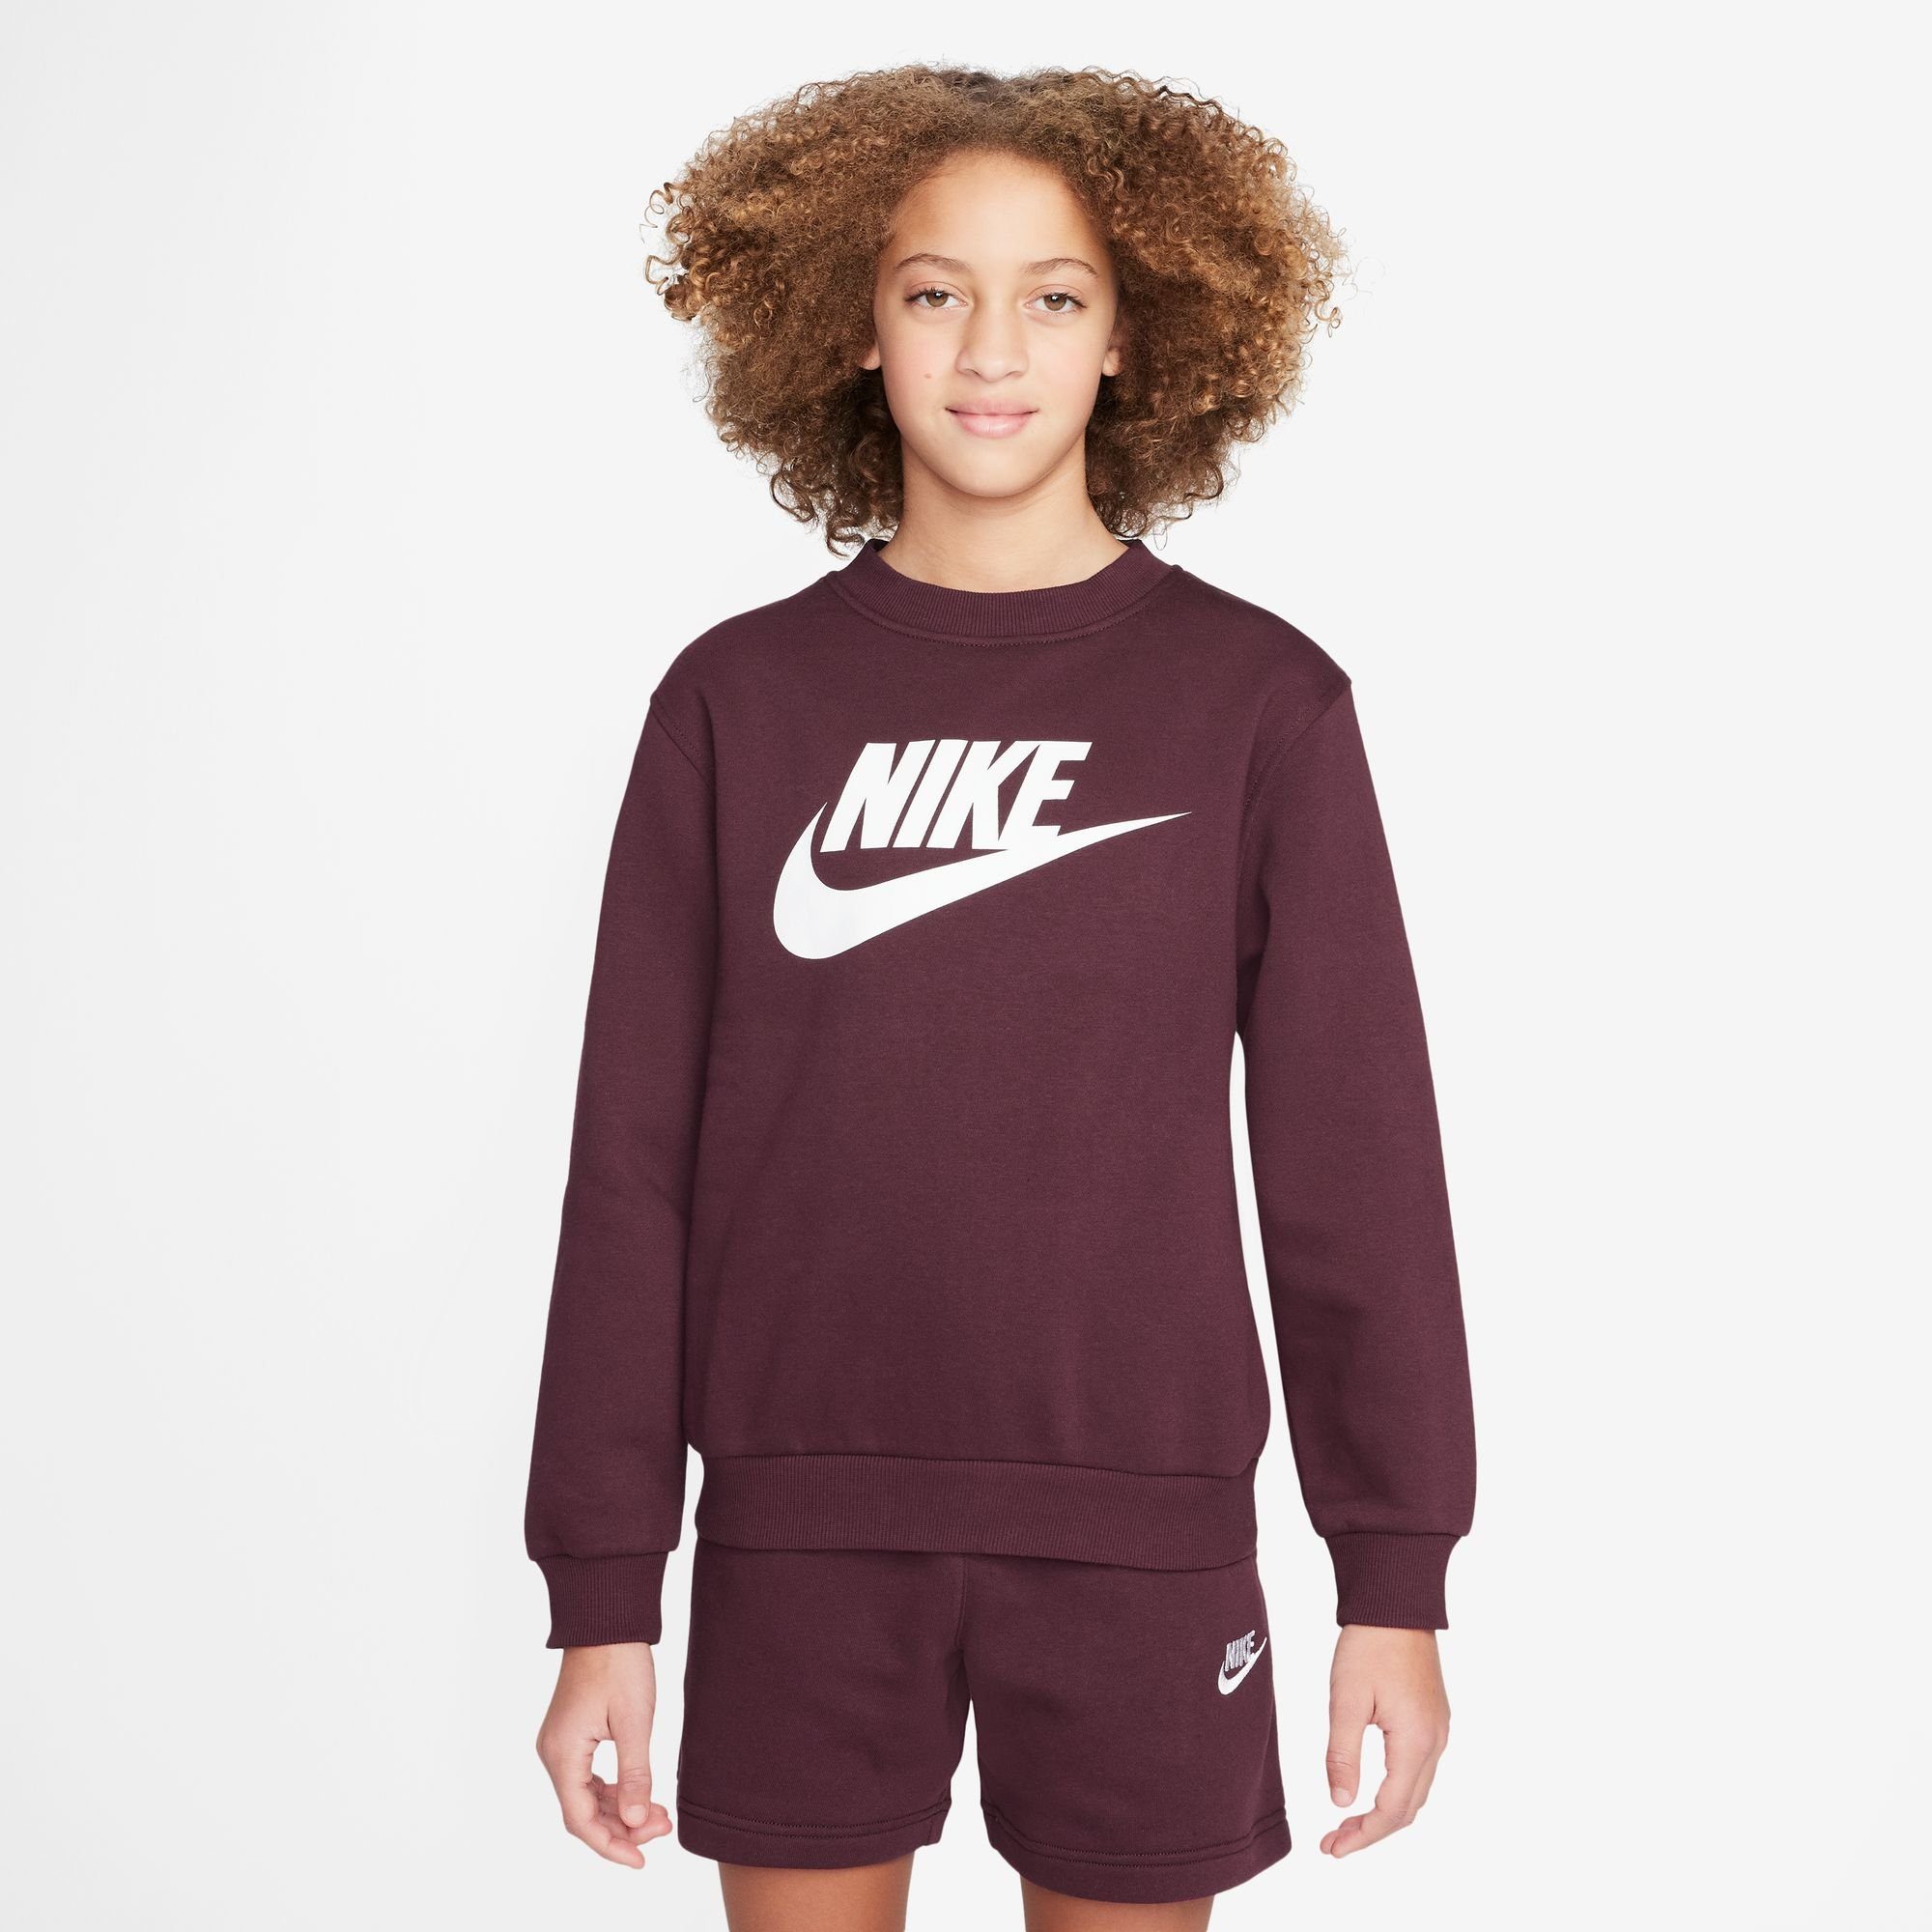 BIG SWEATSHIRT Nike FLEECE NIGHT Sweatshirt CLUB MAROON/WHITE KIDS' Sportswear